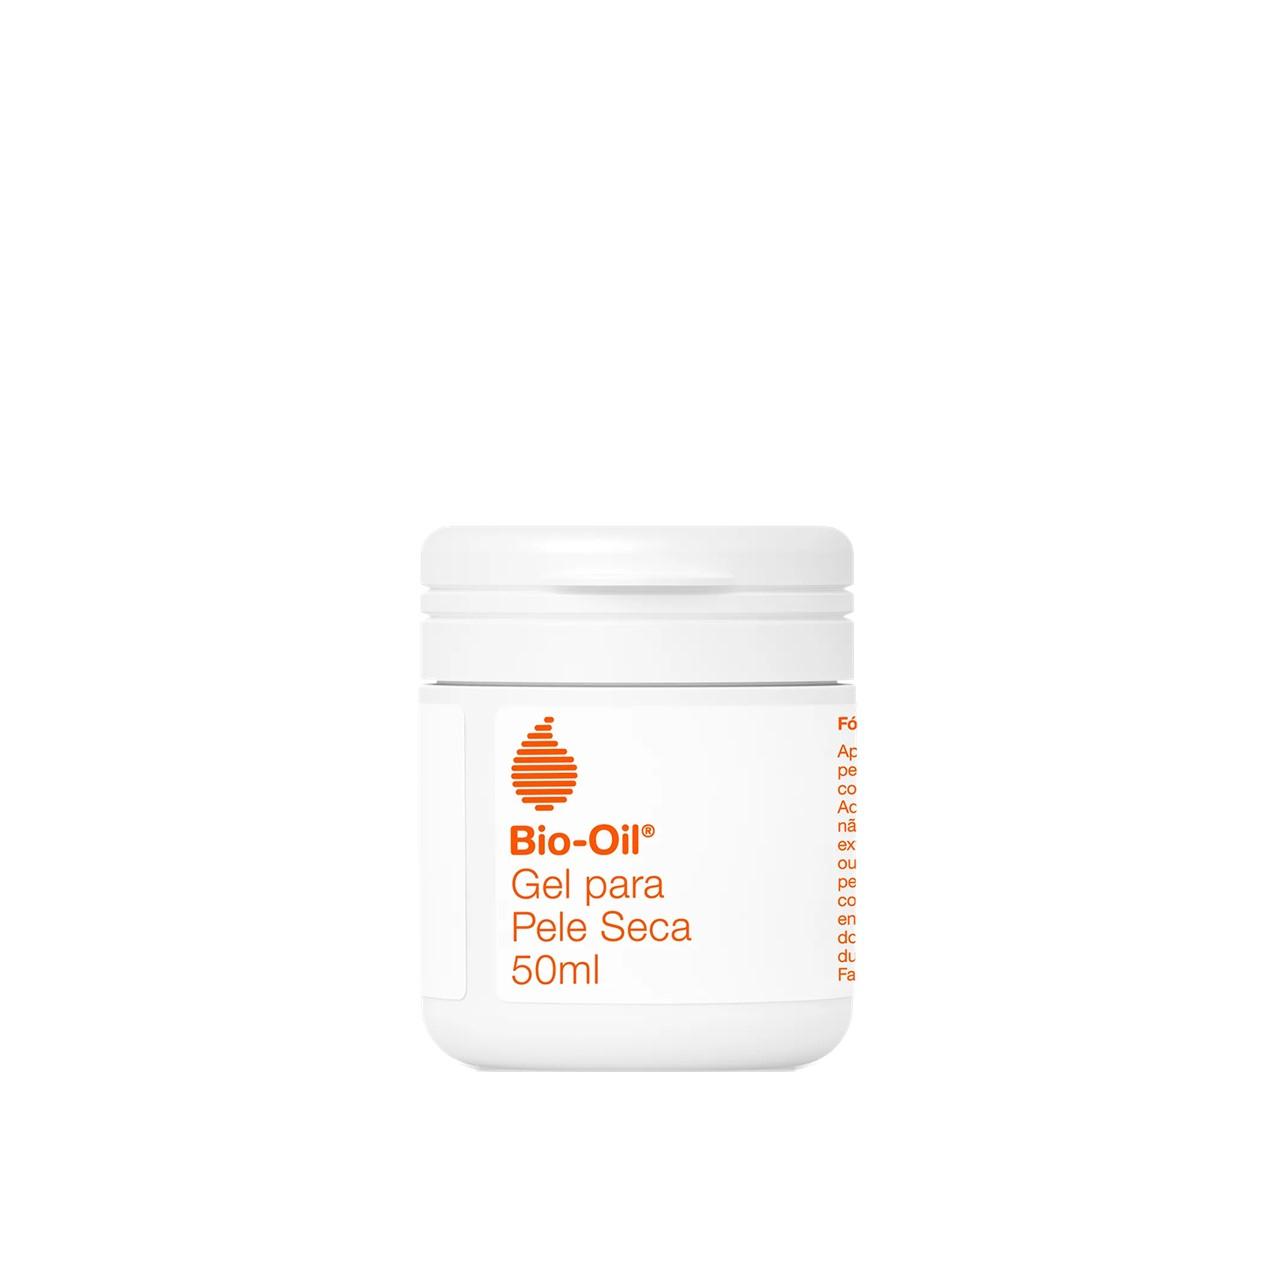 Bio-Oil Dry Skin Gel 50ml (1.69fl oz)